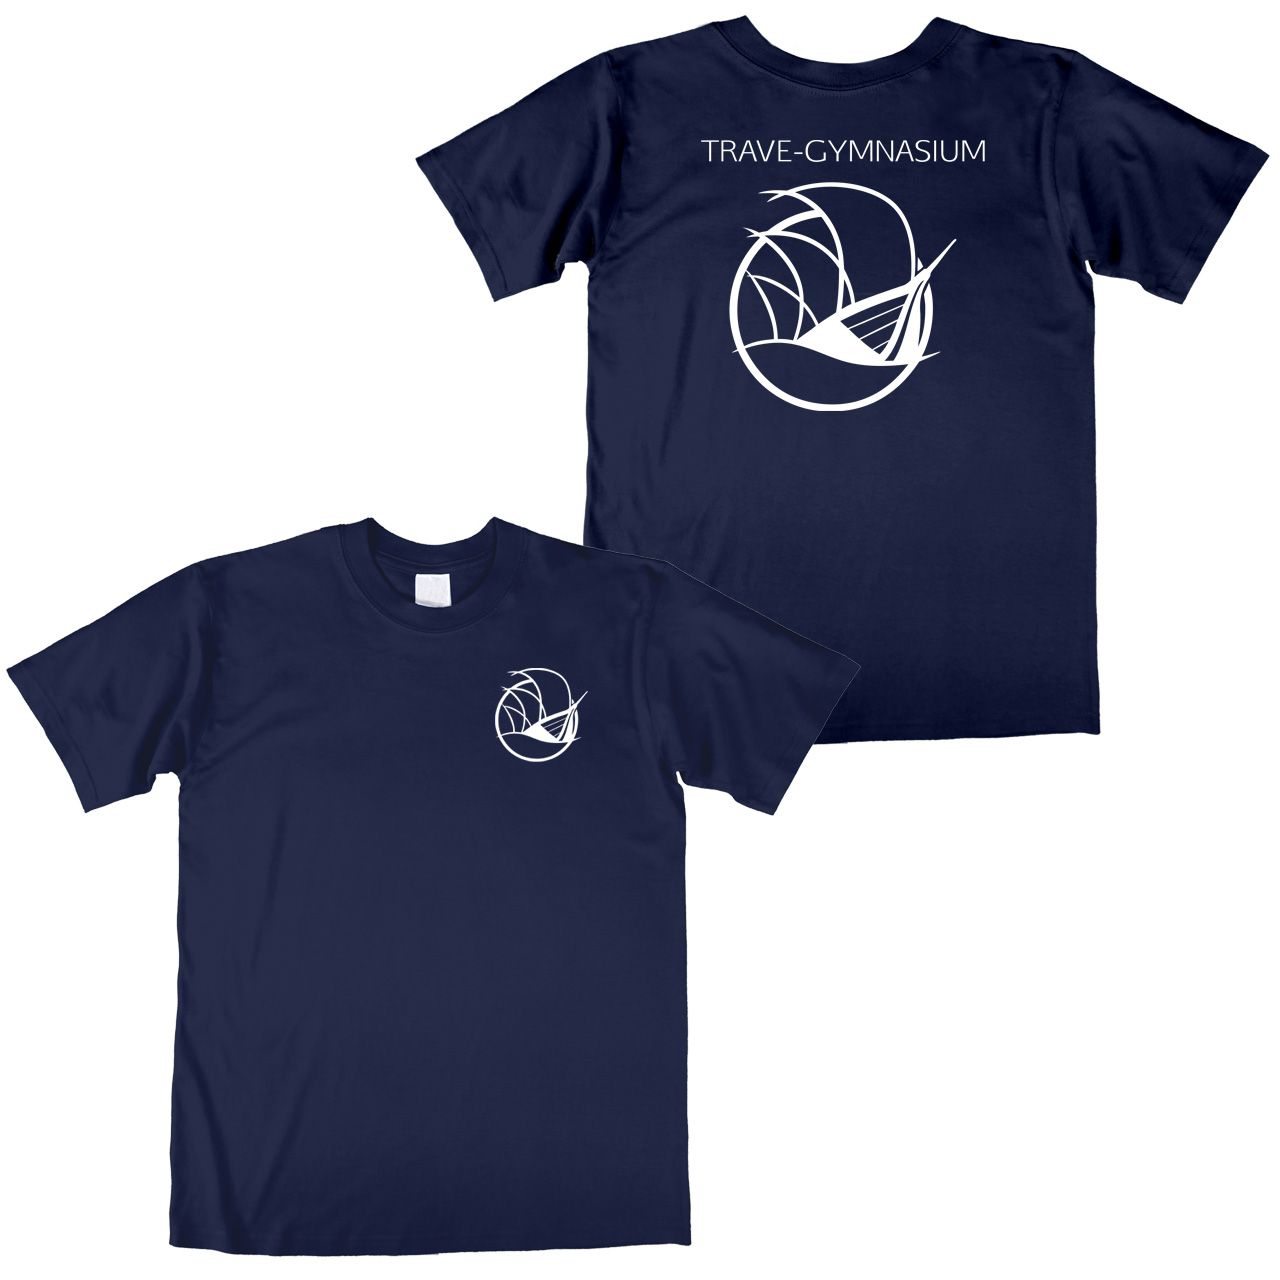 Trave Gymnasium Unisex T-Shirt navy Medium